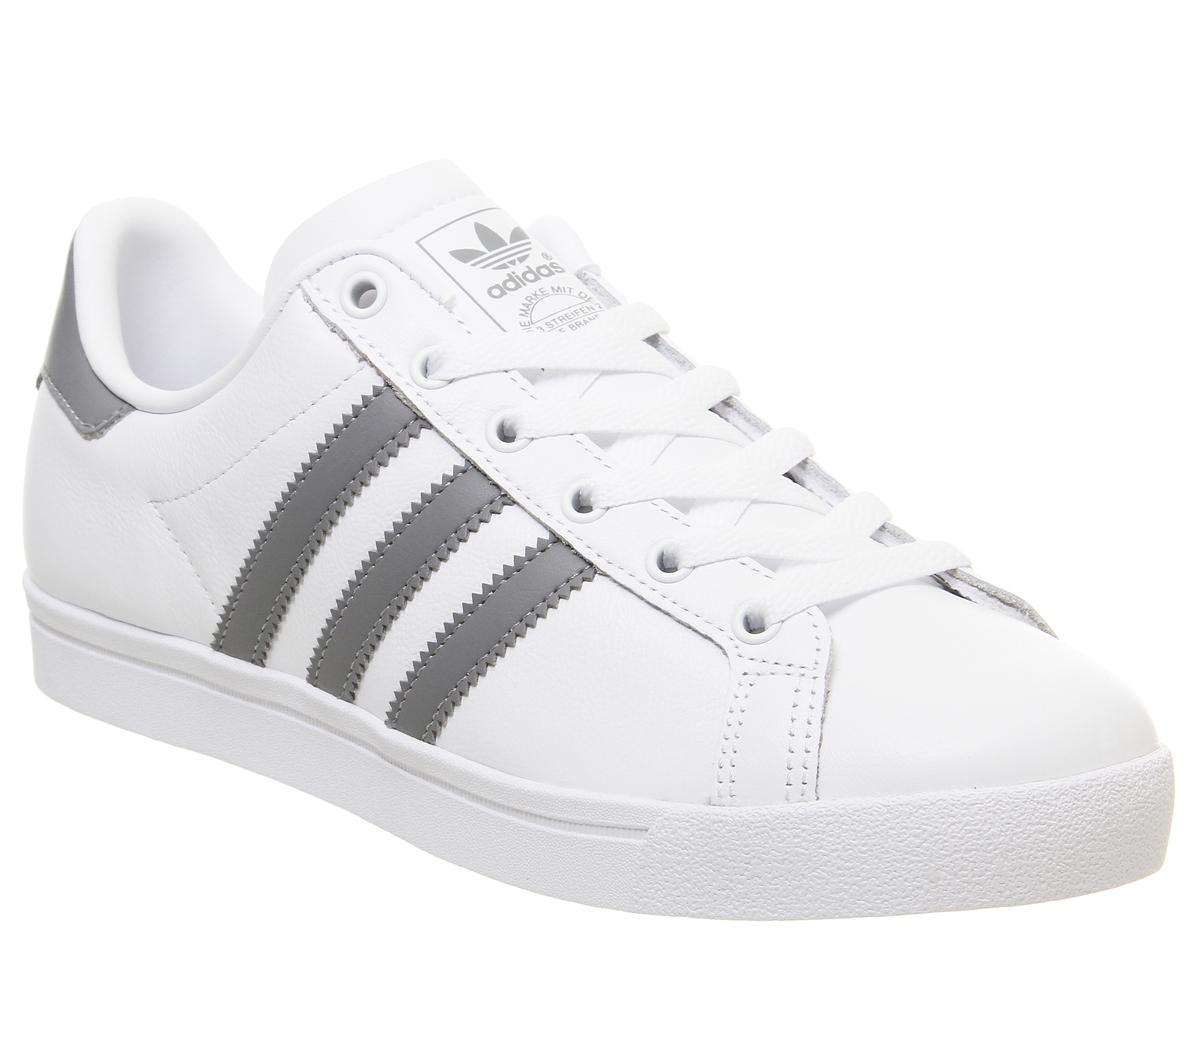 adidas coast star trainers white black white